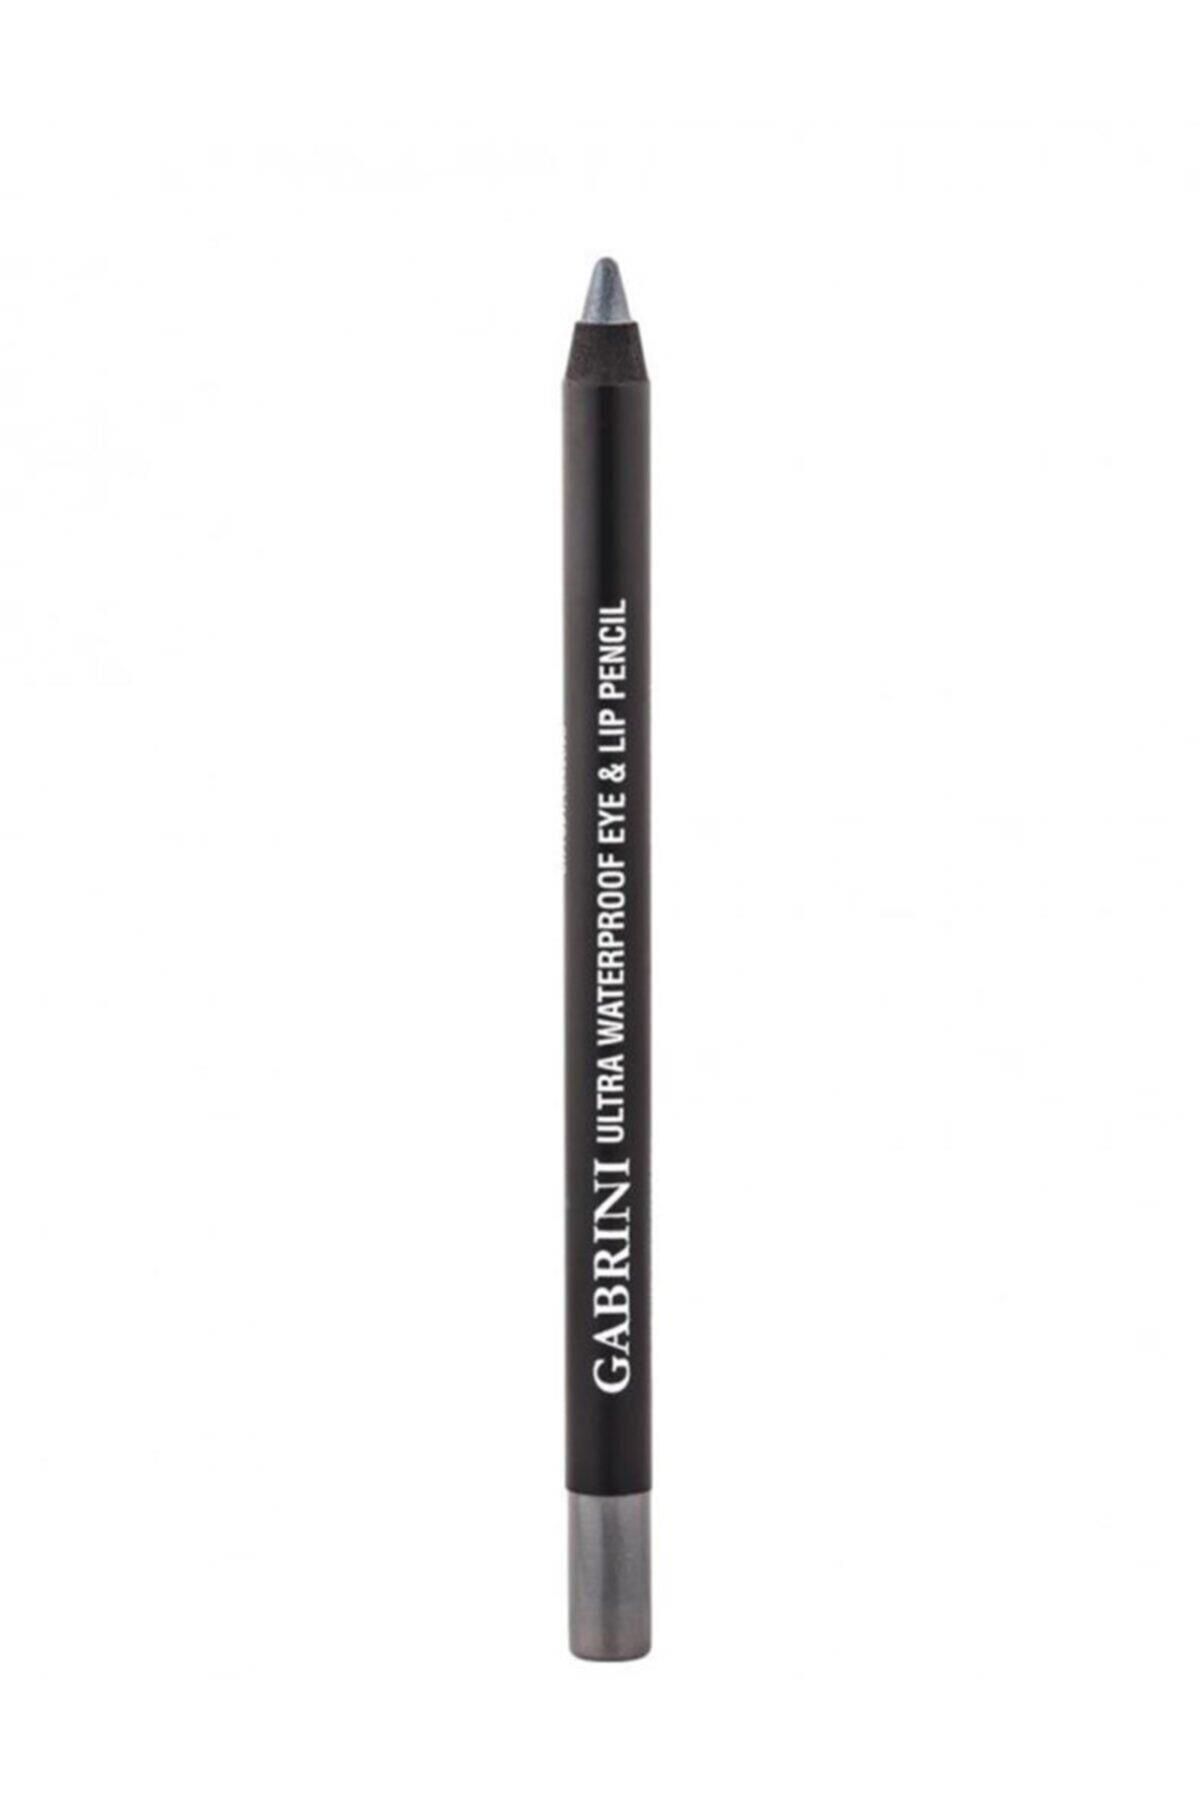 Gabrini Ultra Waterproof Eye & Lip Pencil 11